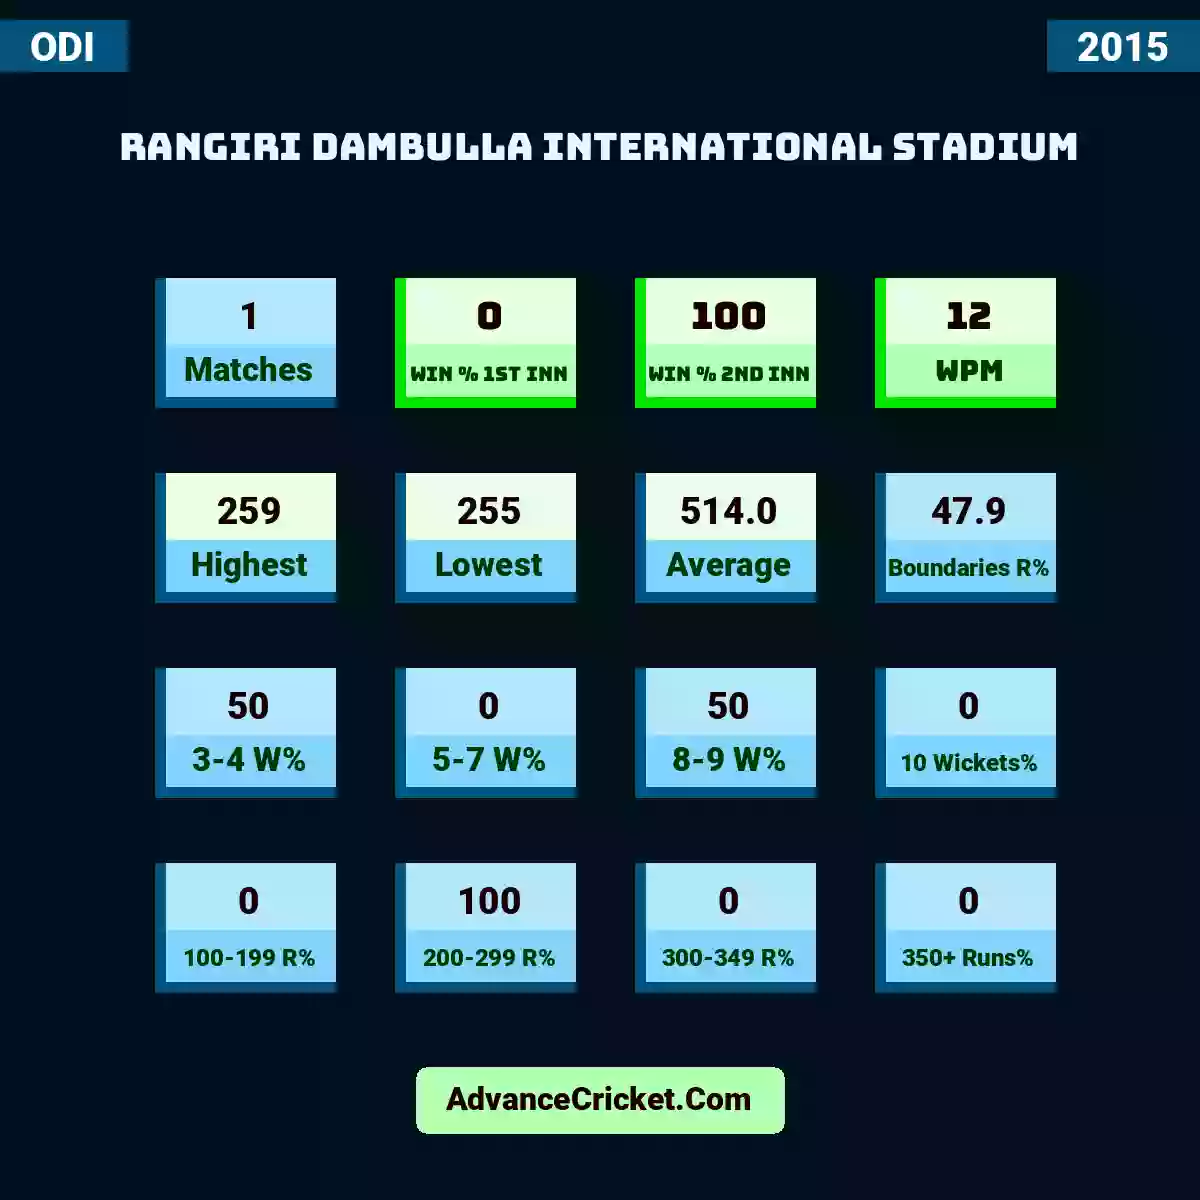 Image showing Rangiri Dambulla International Stadium with Matches: 1, Win % 1st Inn: 0, Win % 2nd Inn: 100, WPM: 12, Highest: 259, Lowest: 255, Average: 514.0, Boundaries R%: 47.9, 3-4 W%: 50, 5-7 W%: 0, 8-9 W%: 50, 10 Wickets%: 0, 100-199 R%: 0, 200-299 R%: 100, 300-349 R%: 0, 350+ Runs%: 0.